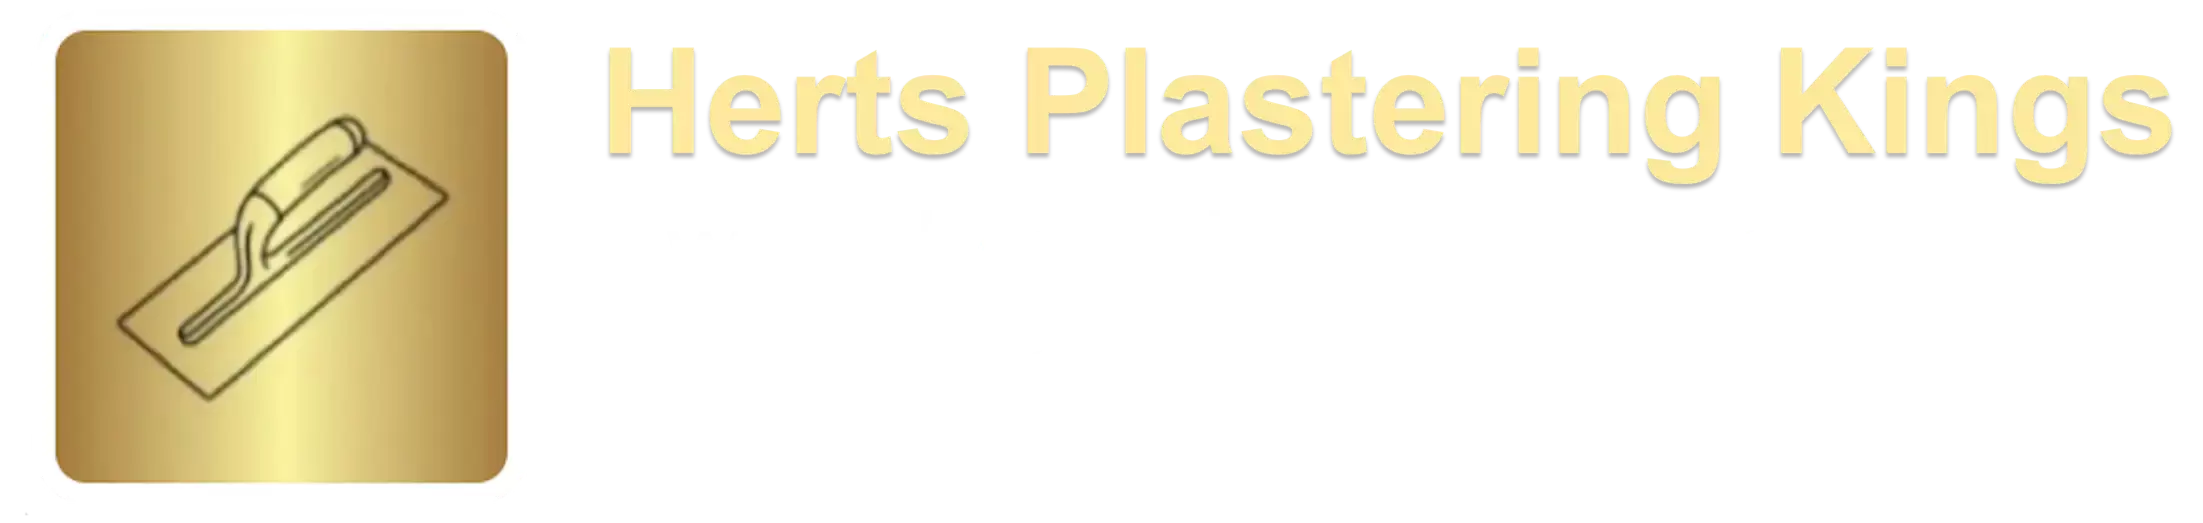 Plasterers in St Albans, Hertfordshire